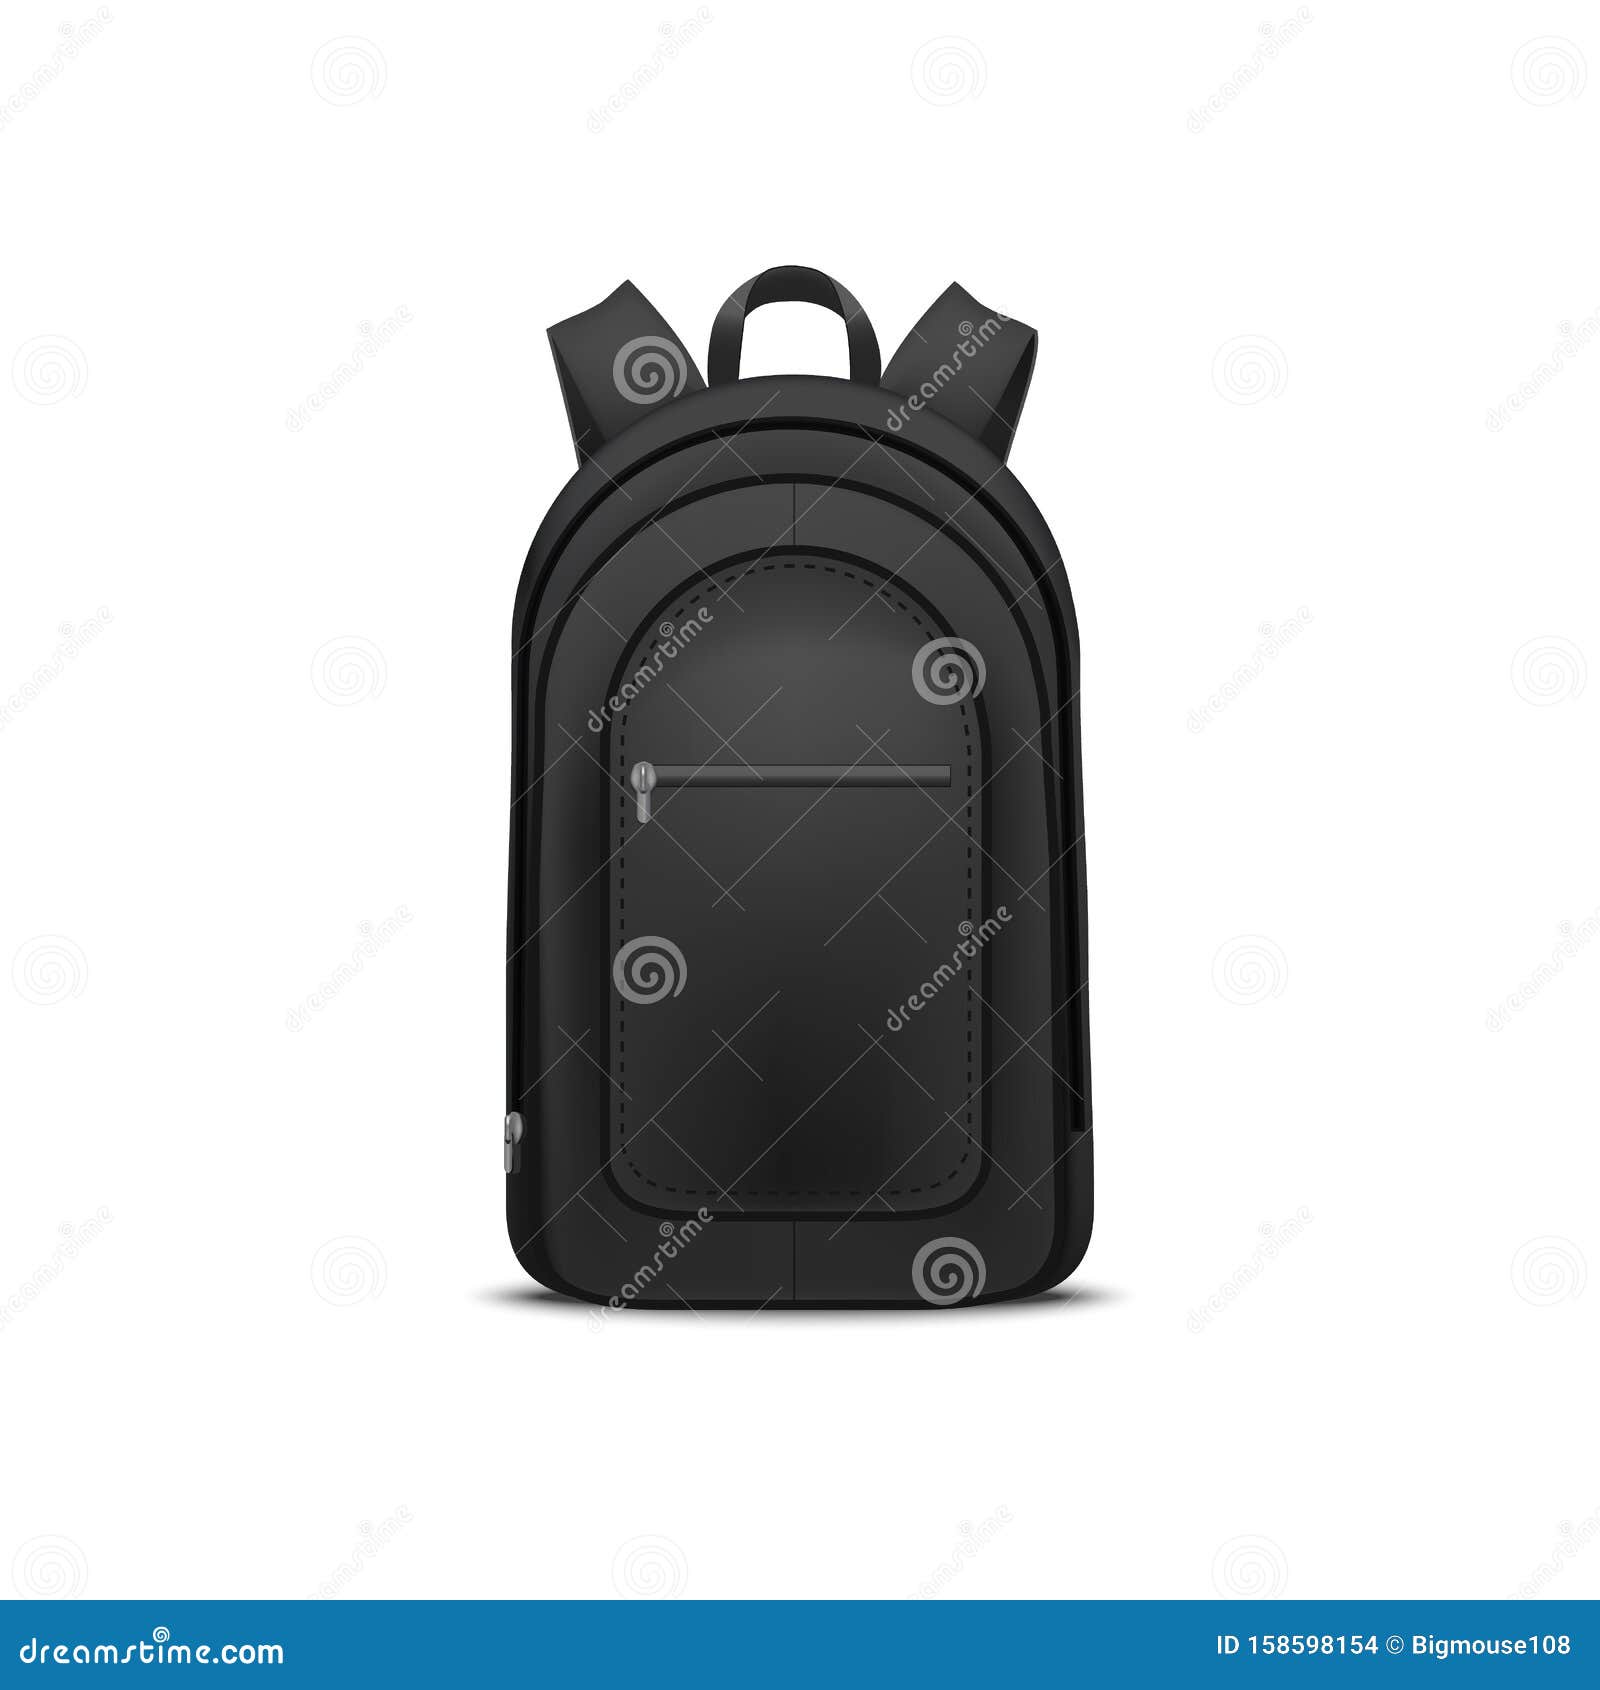 Download Realistic Detailed 3d Black Blank School Backpack Template Mockup. Vector Stock Vector ...